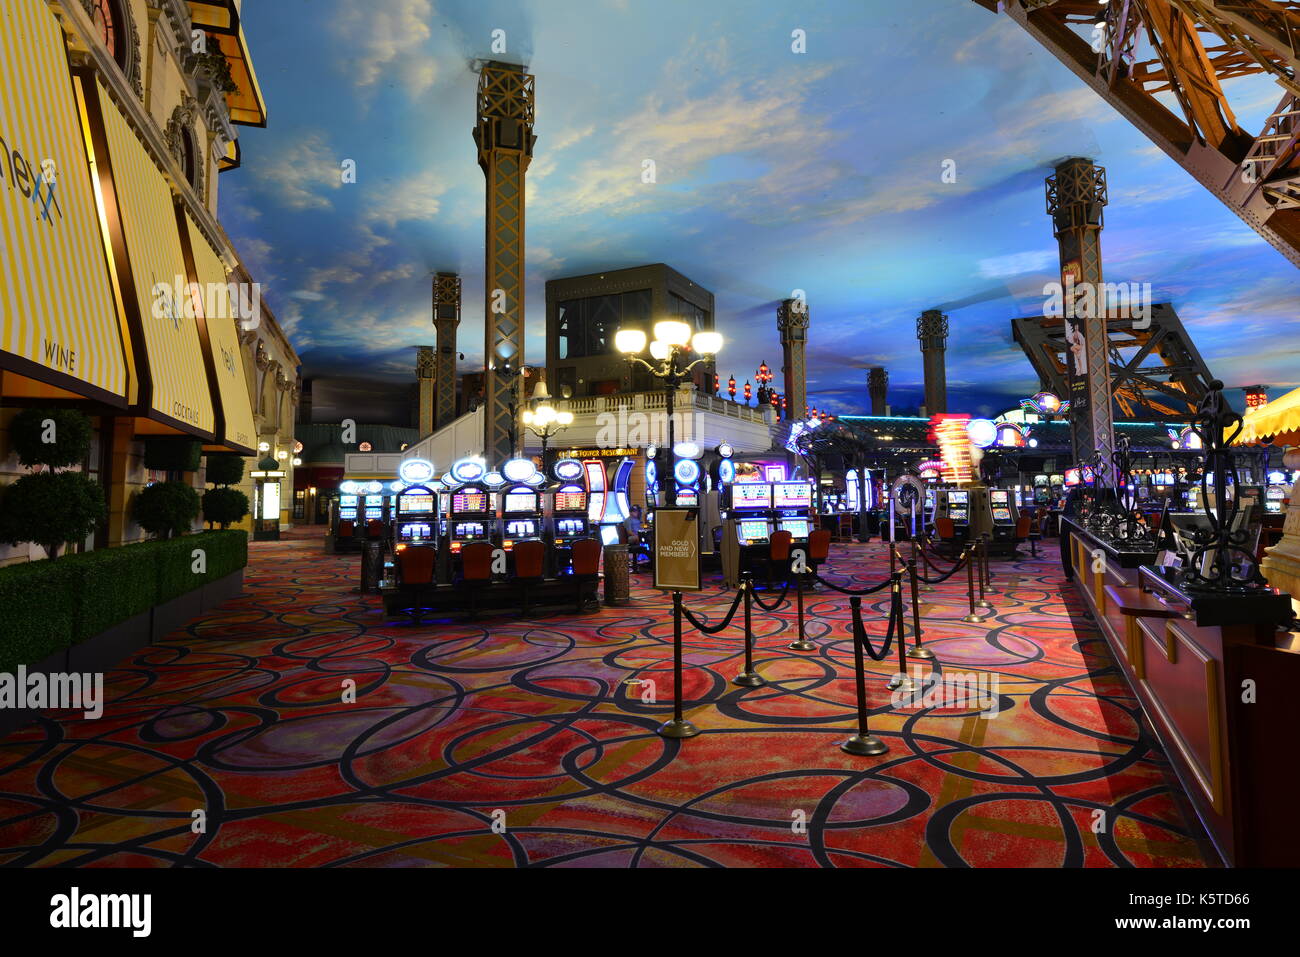 Inside casino paris las vegas hi-res stock photography and images - Alamy